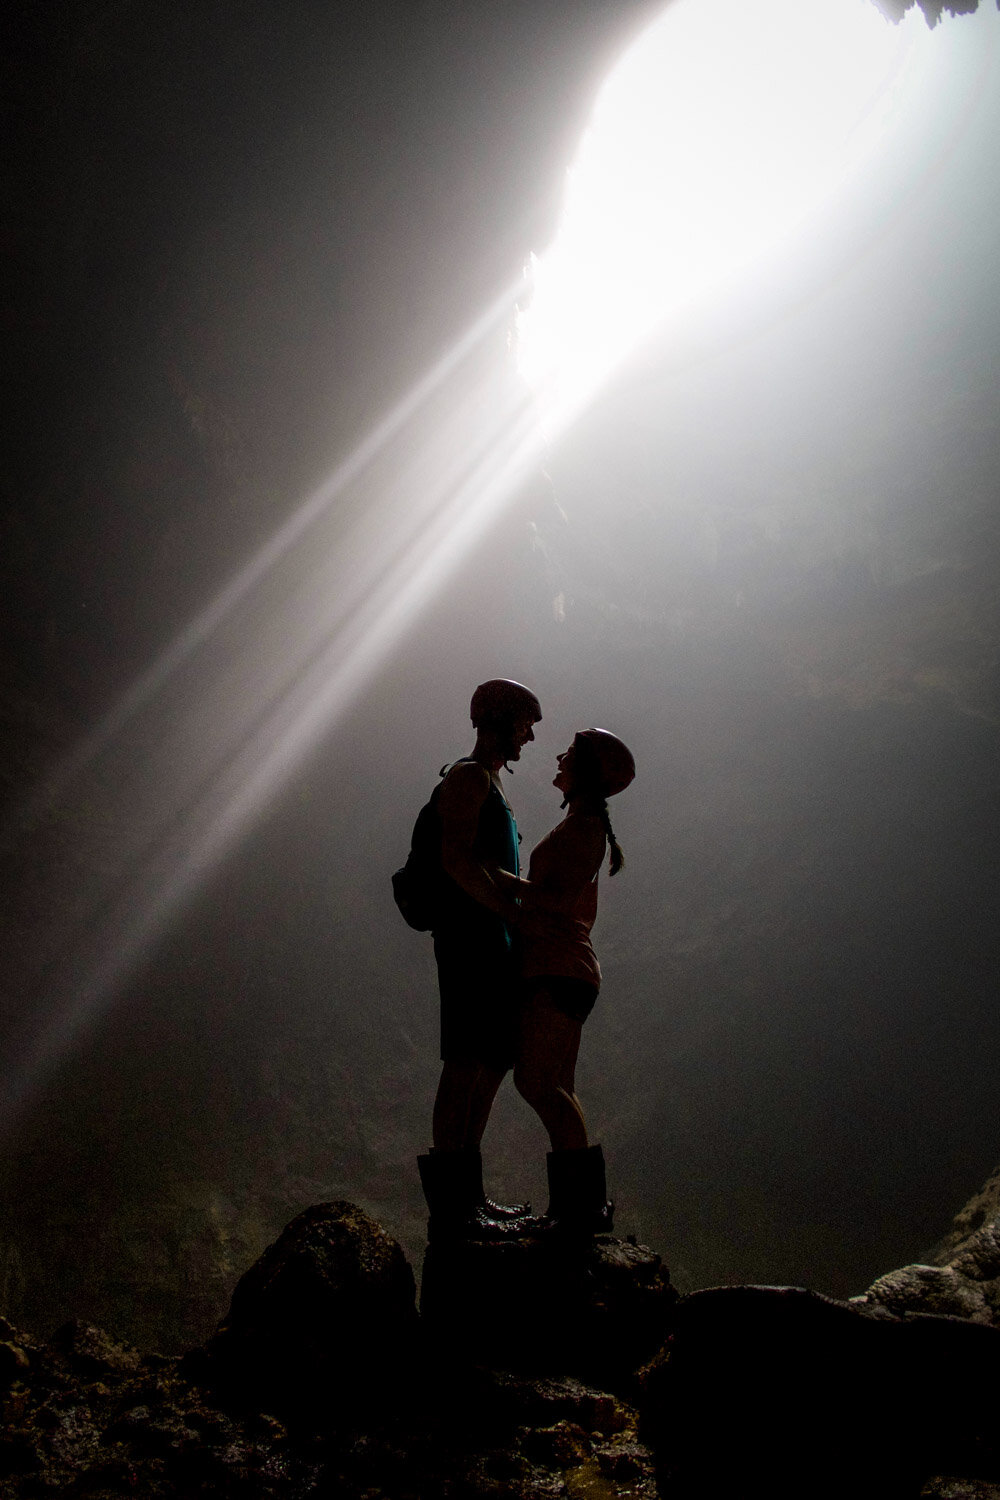 Jomblang Cave Stream of Light Things to do in Yogyakarta